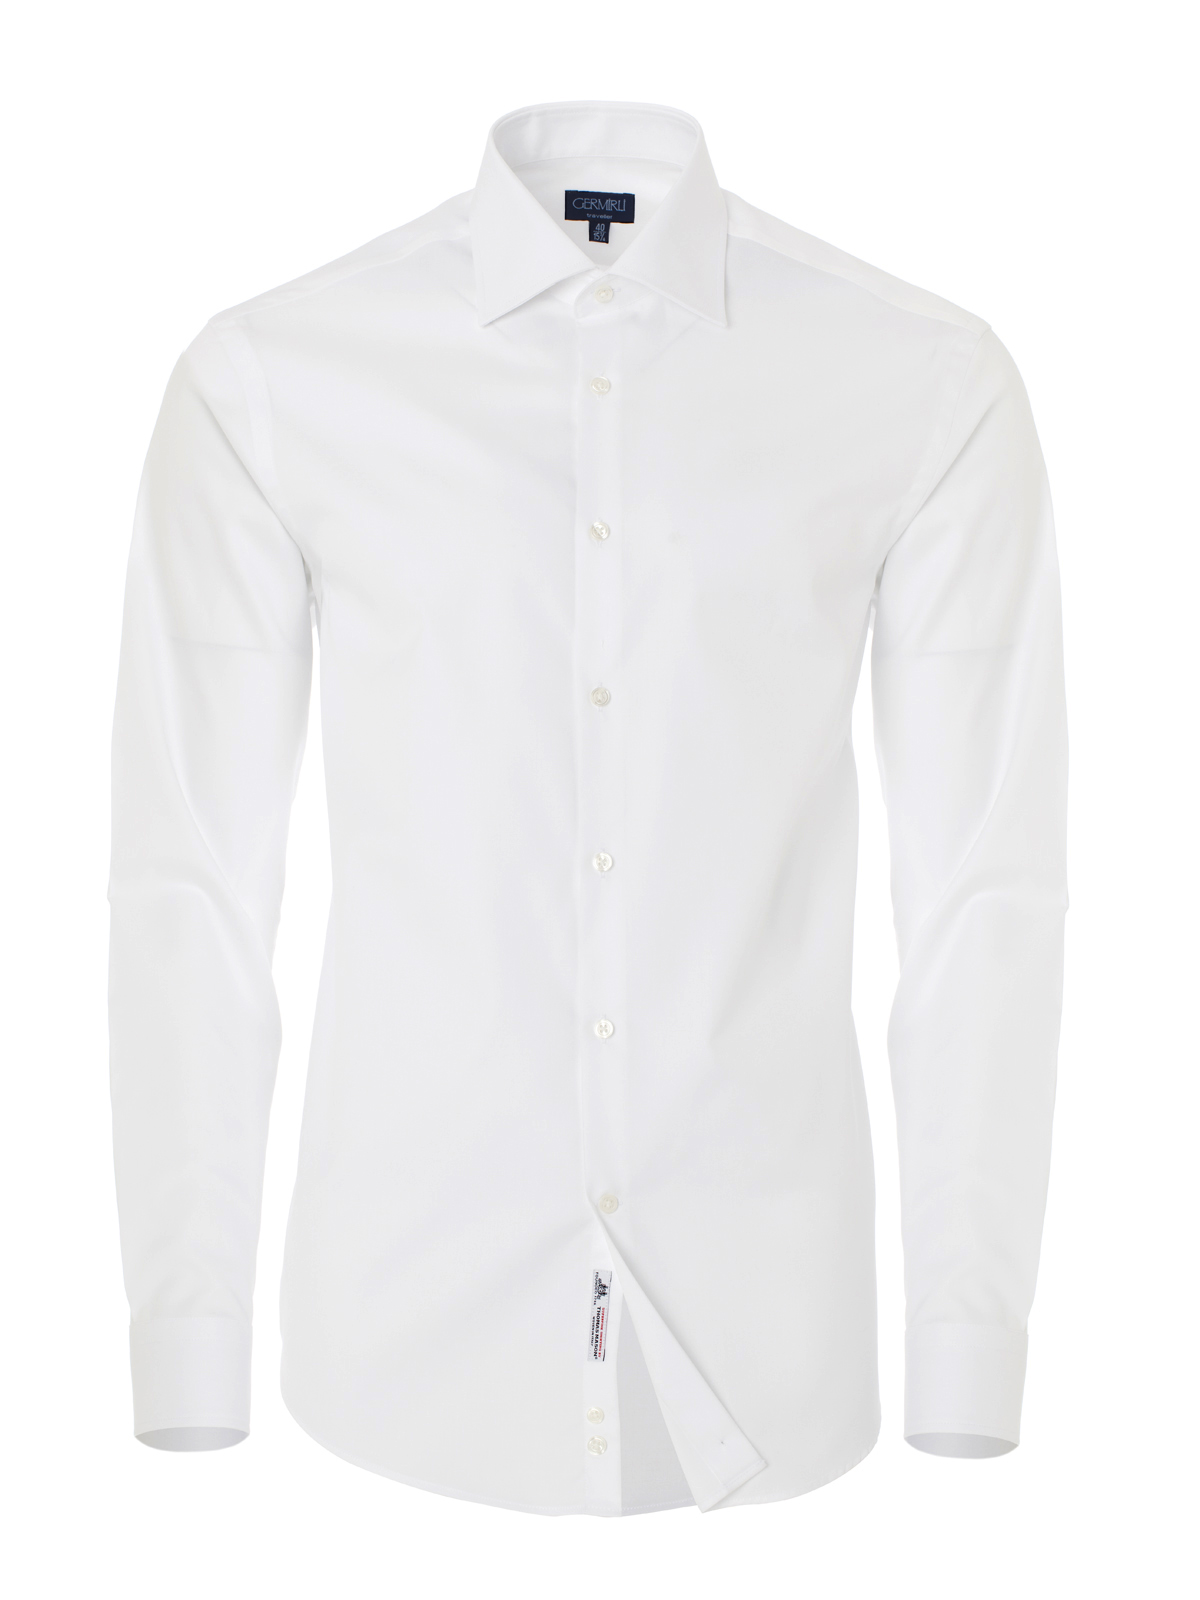 Germirli - Germirli Non Iron White Semi Spread Tailor Fit Journey Shirt